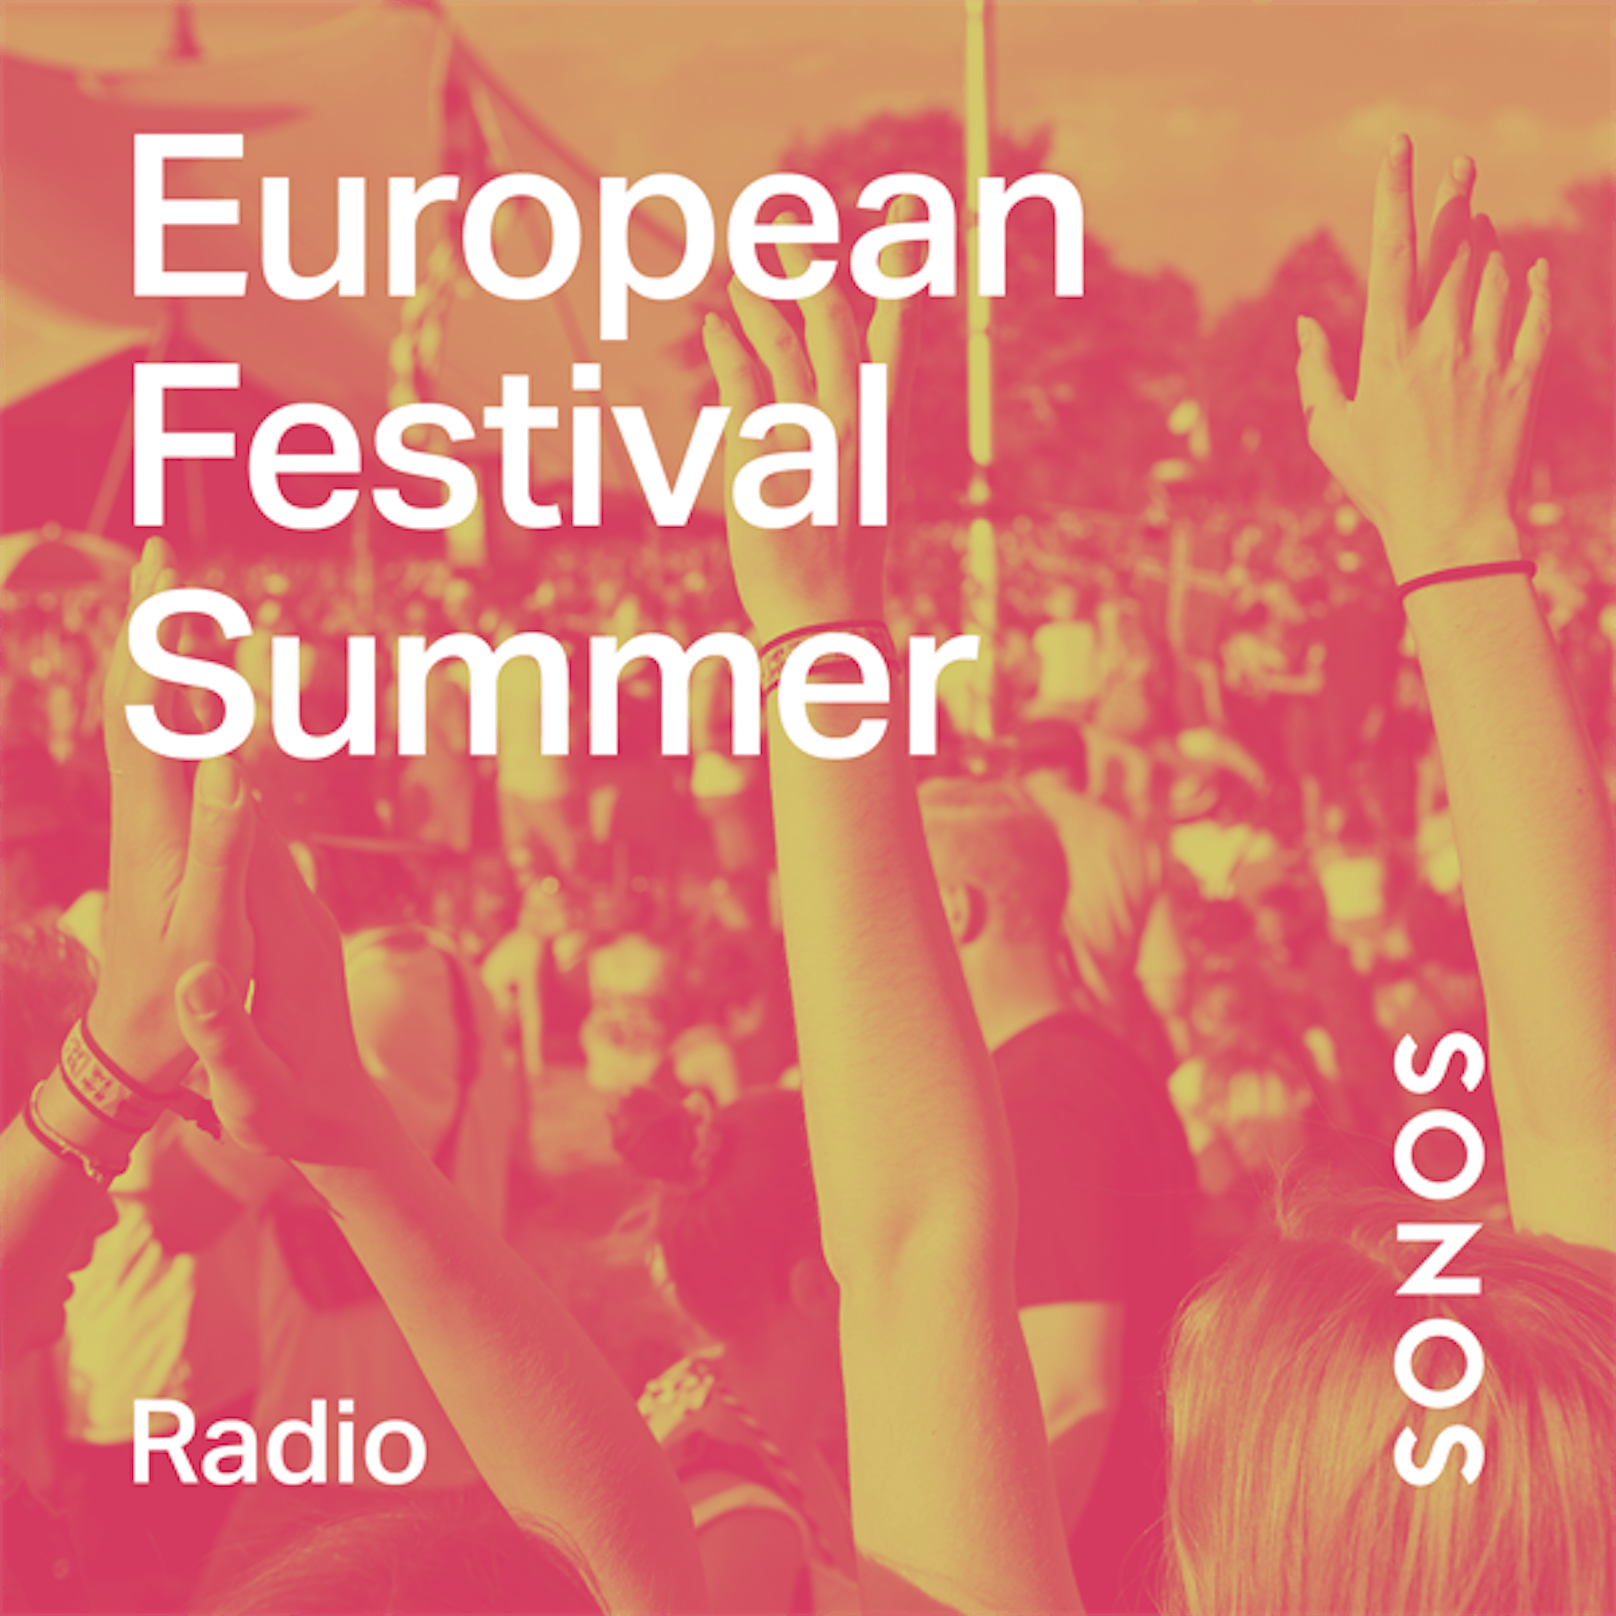 European Festival Summer auf Sonos Radio.